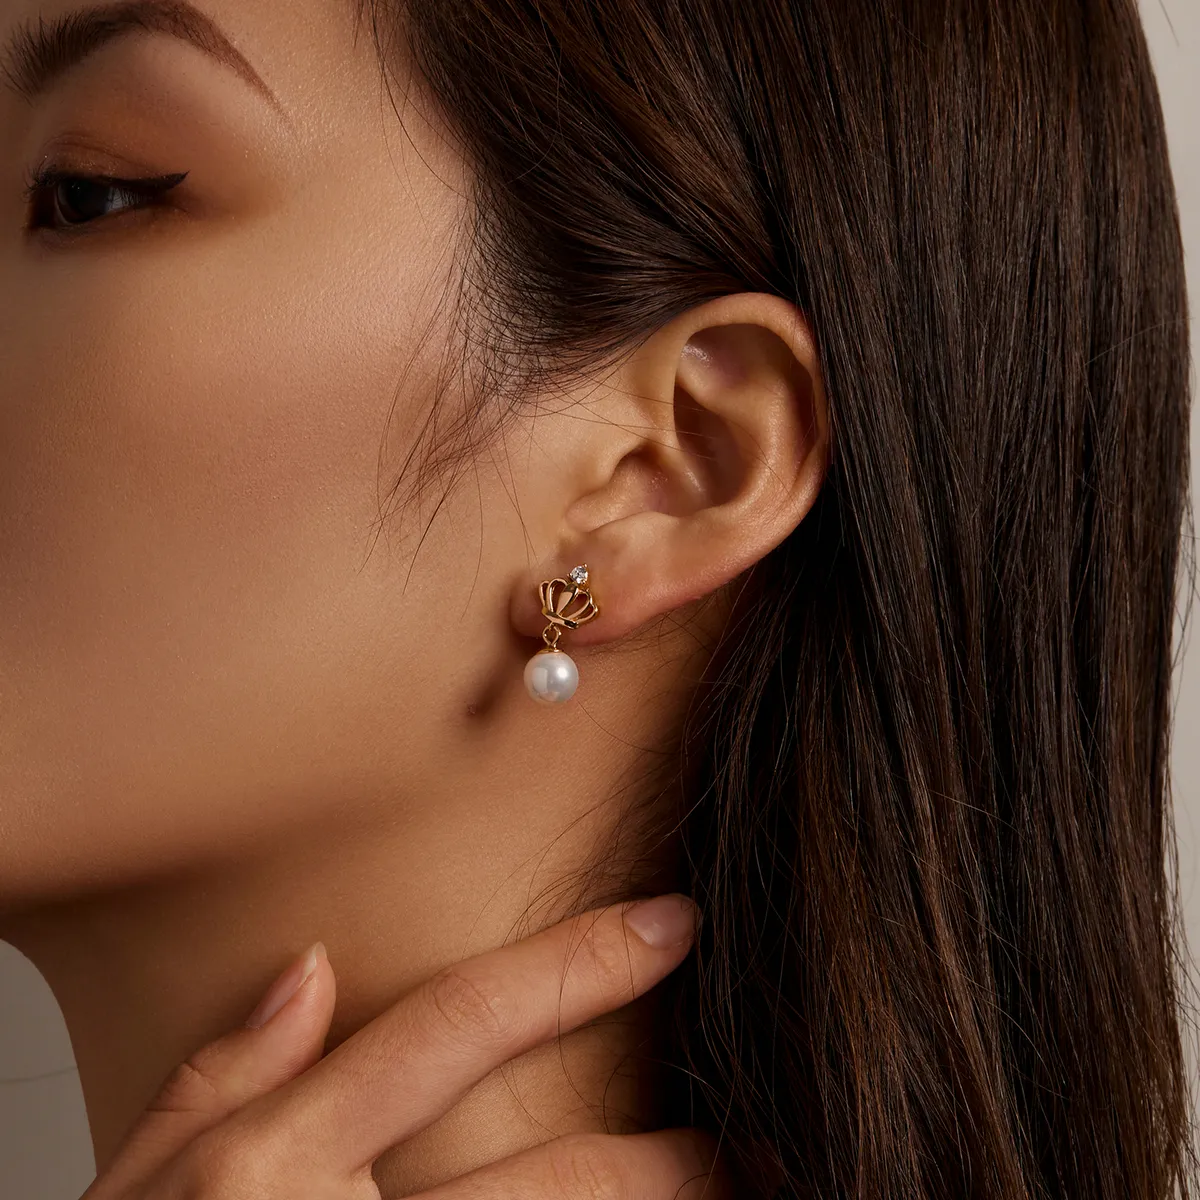 Pandora Style Crown Shell Beads Stud Earrings - BSE549